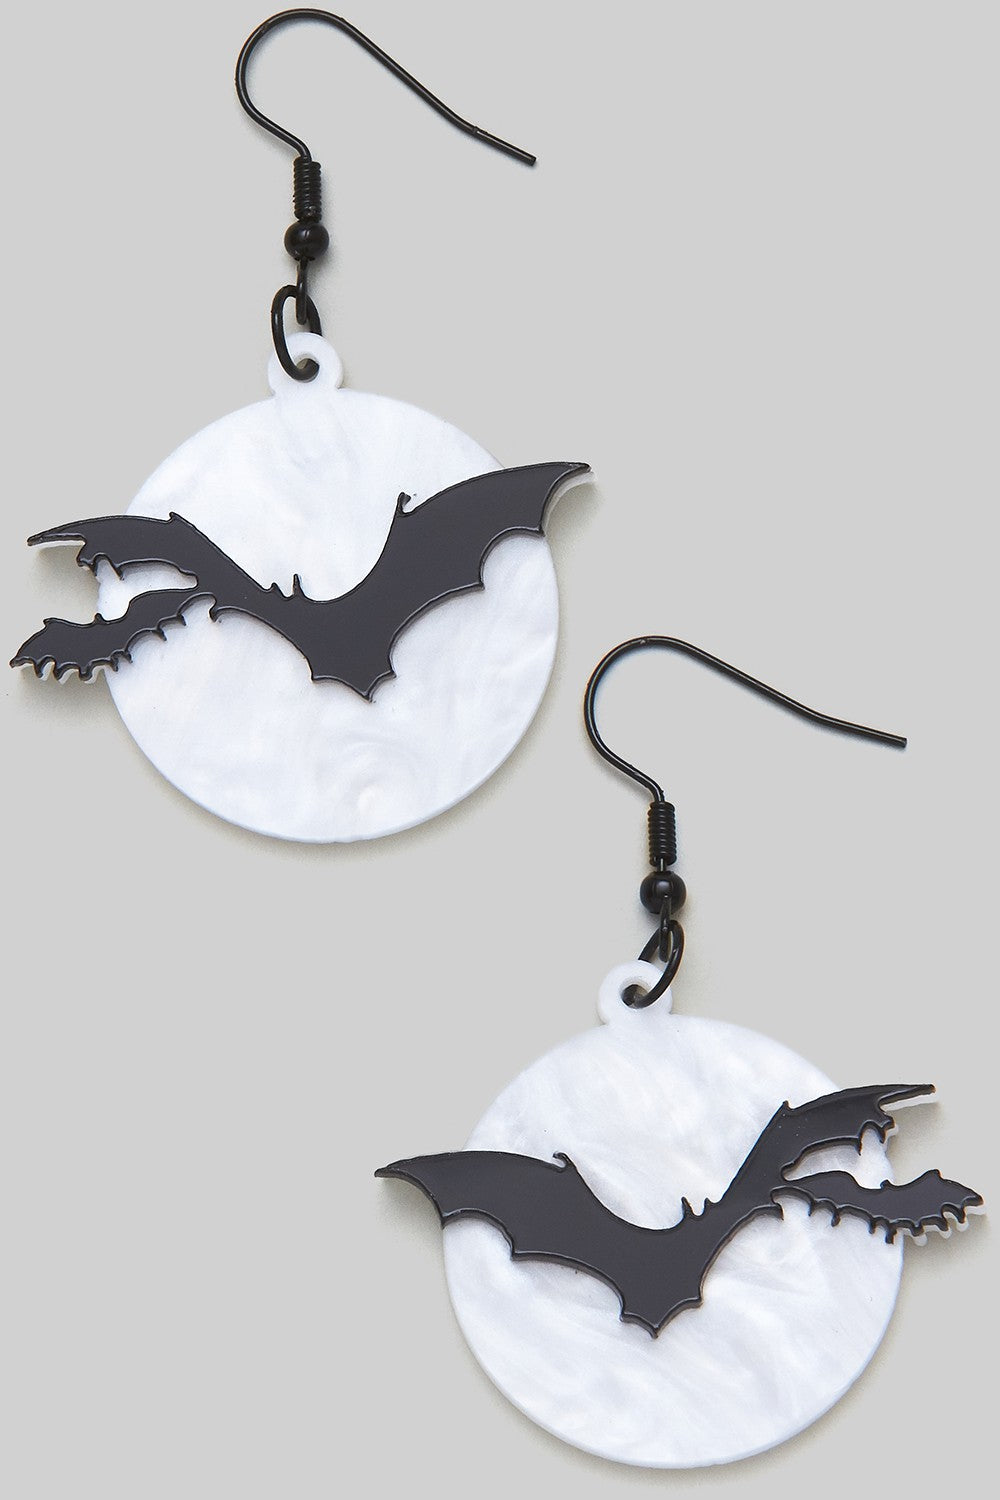 Acrylic black bats flying against a pearly white full moon dangle earrings